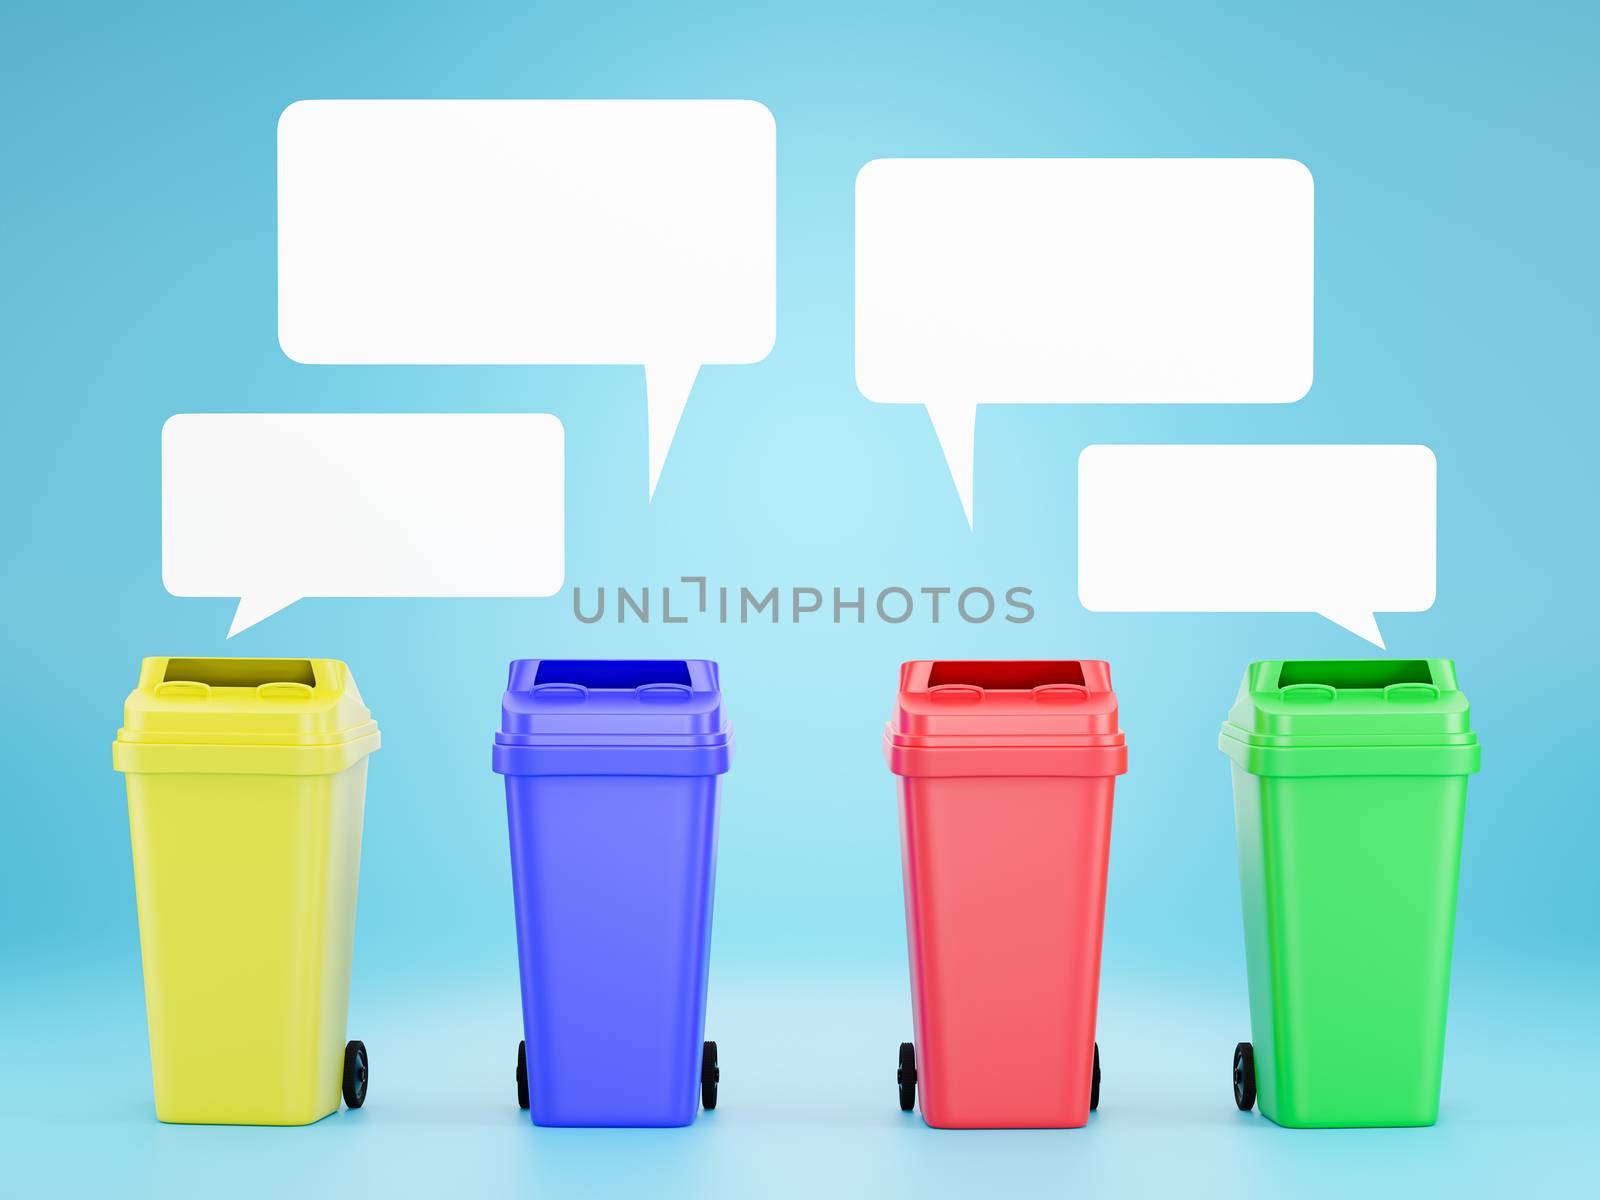 Multicolor trash and white text box on blue background. by SaitanSainam